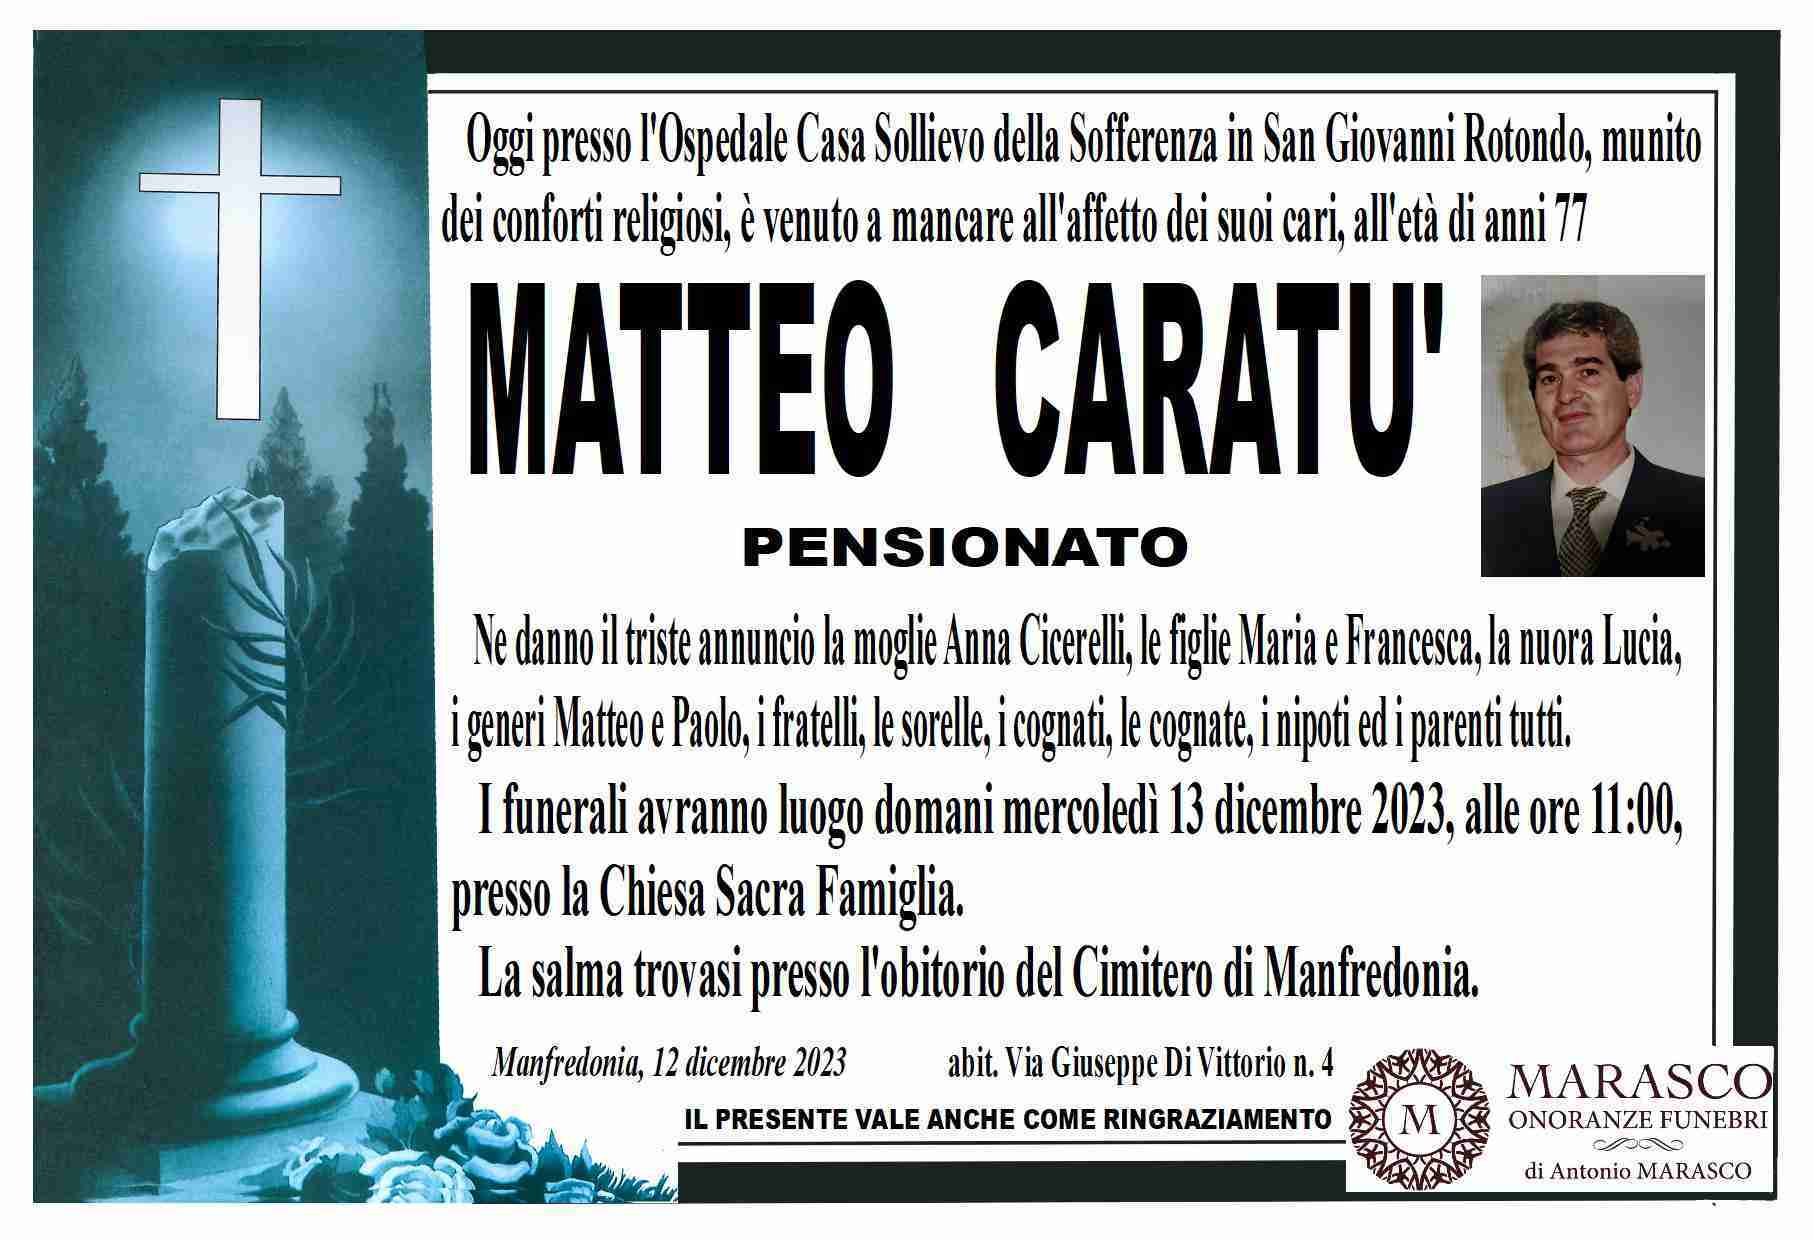 Matteo Caratù